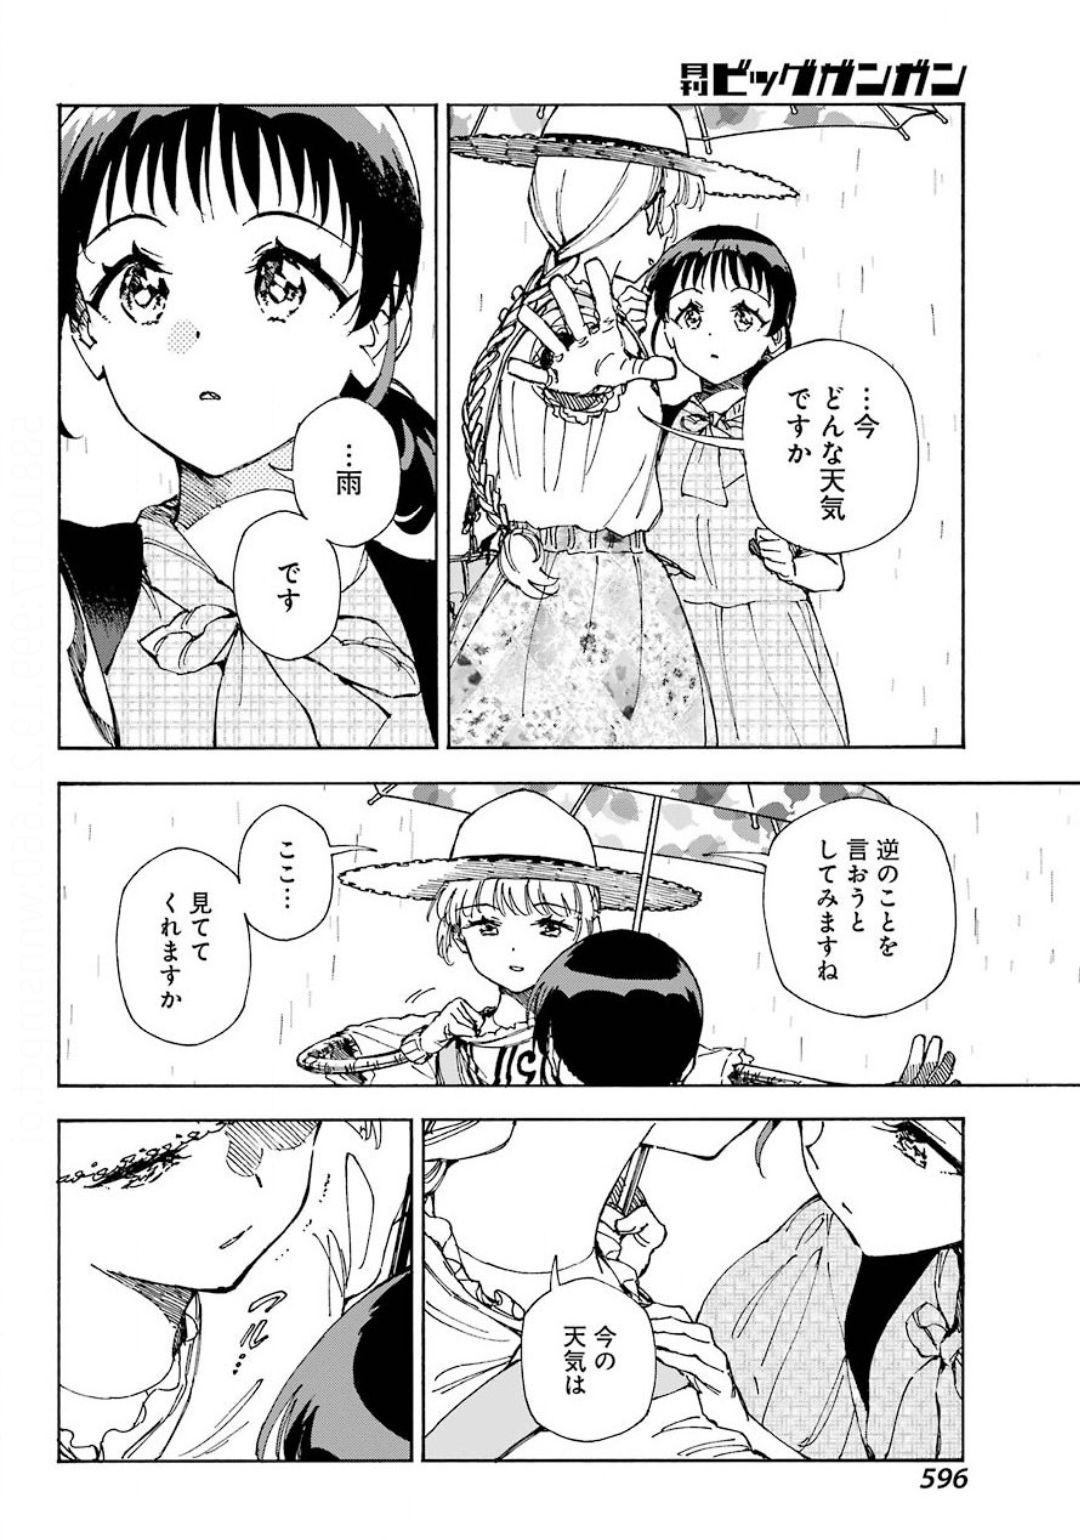 Hotomeku-kakashi - Chapter 06-2 - Page 17